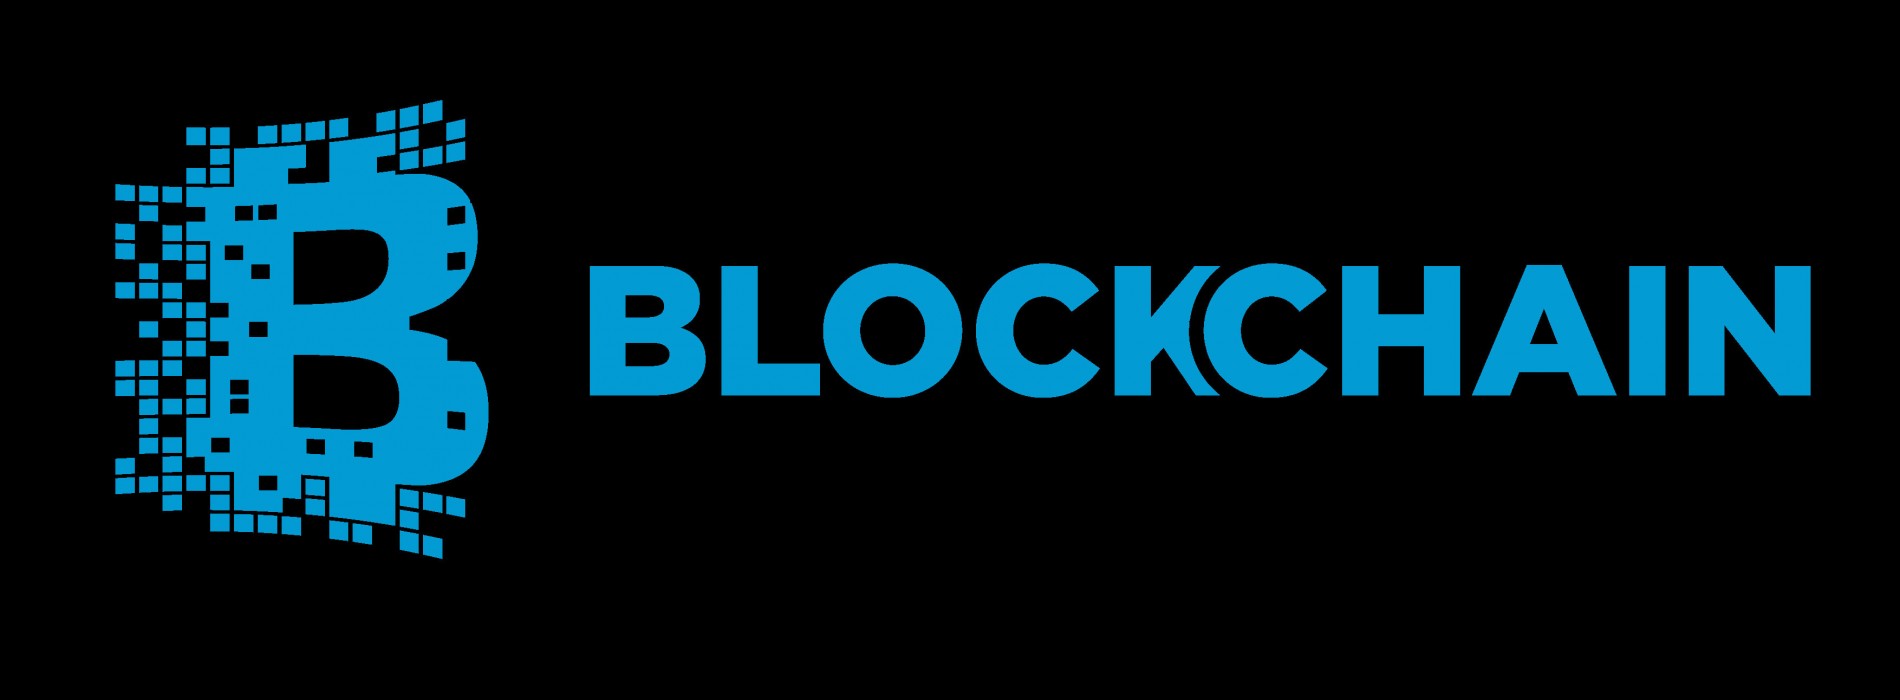 blockchain_inf-1900x700_c.jpg